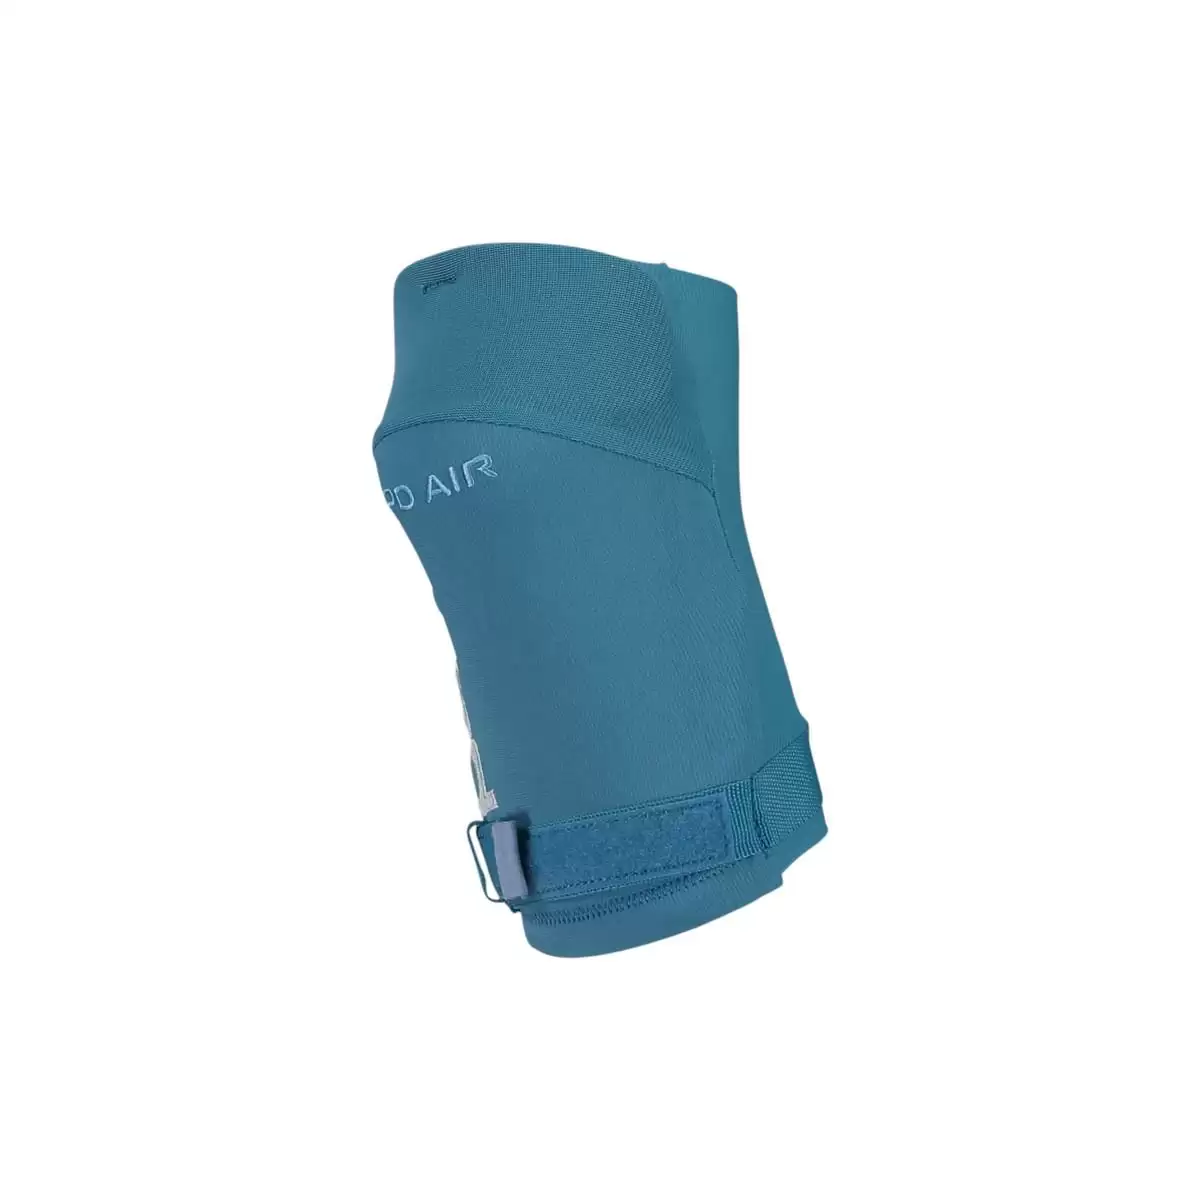 Joint VPD Air Elbow Protectors Basalt Blue Size XL #1